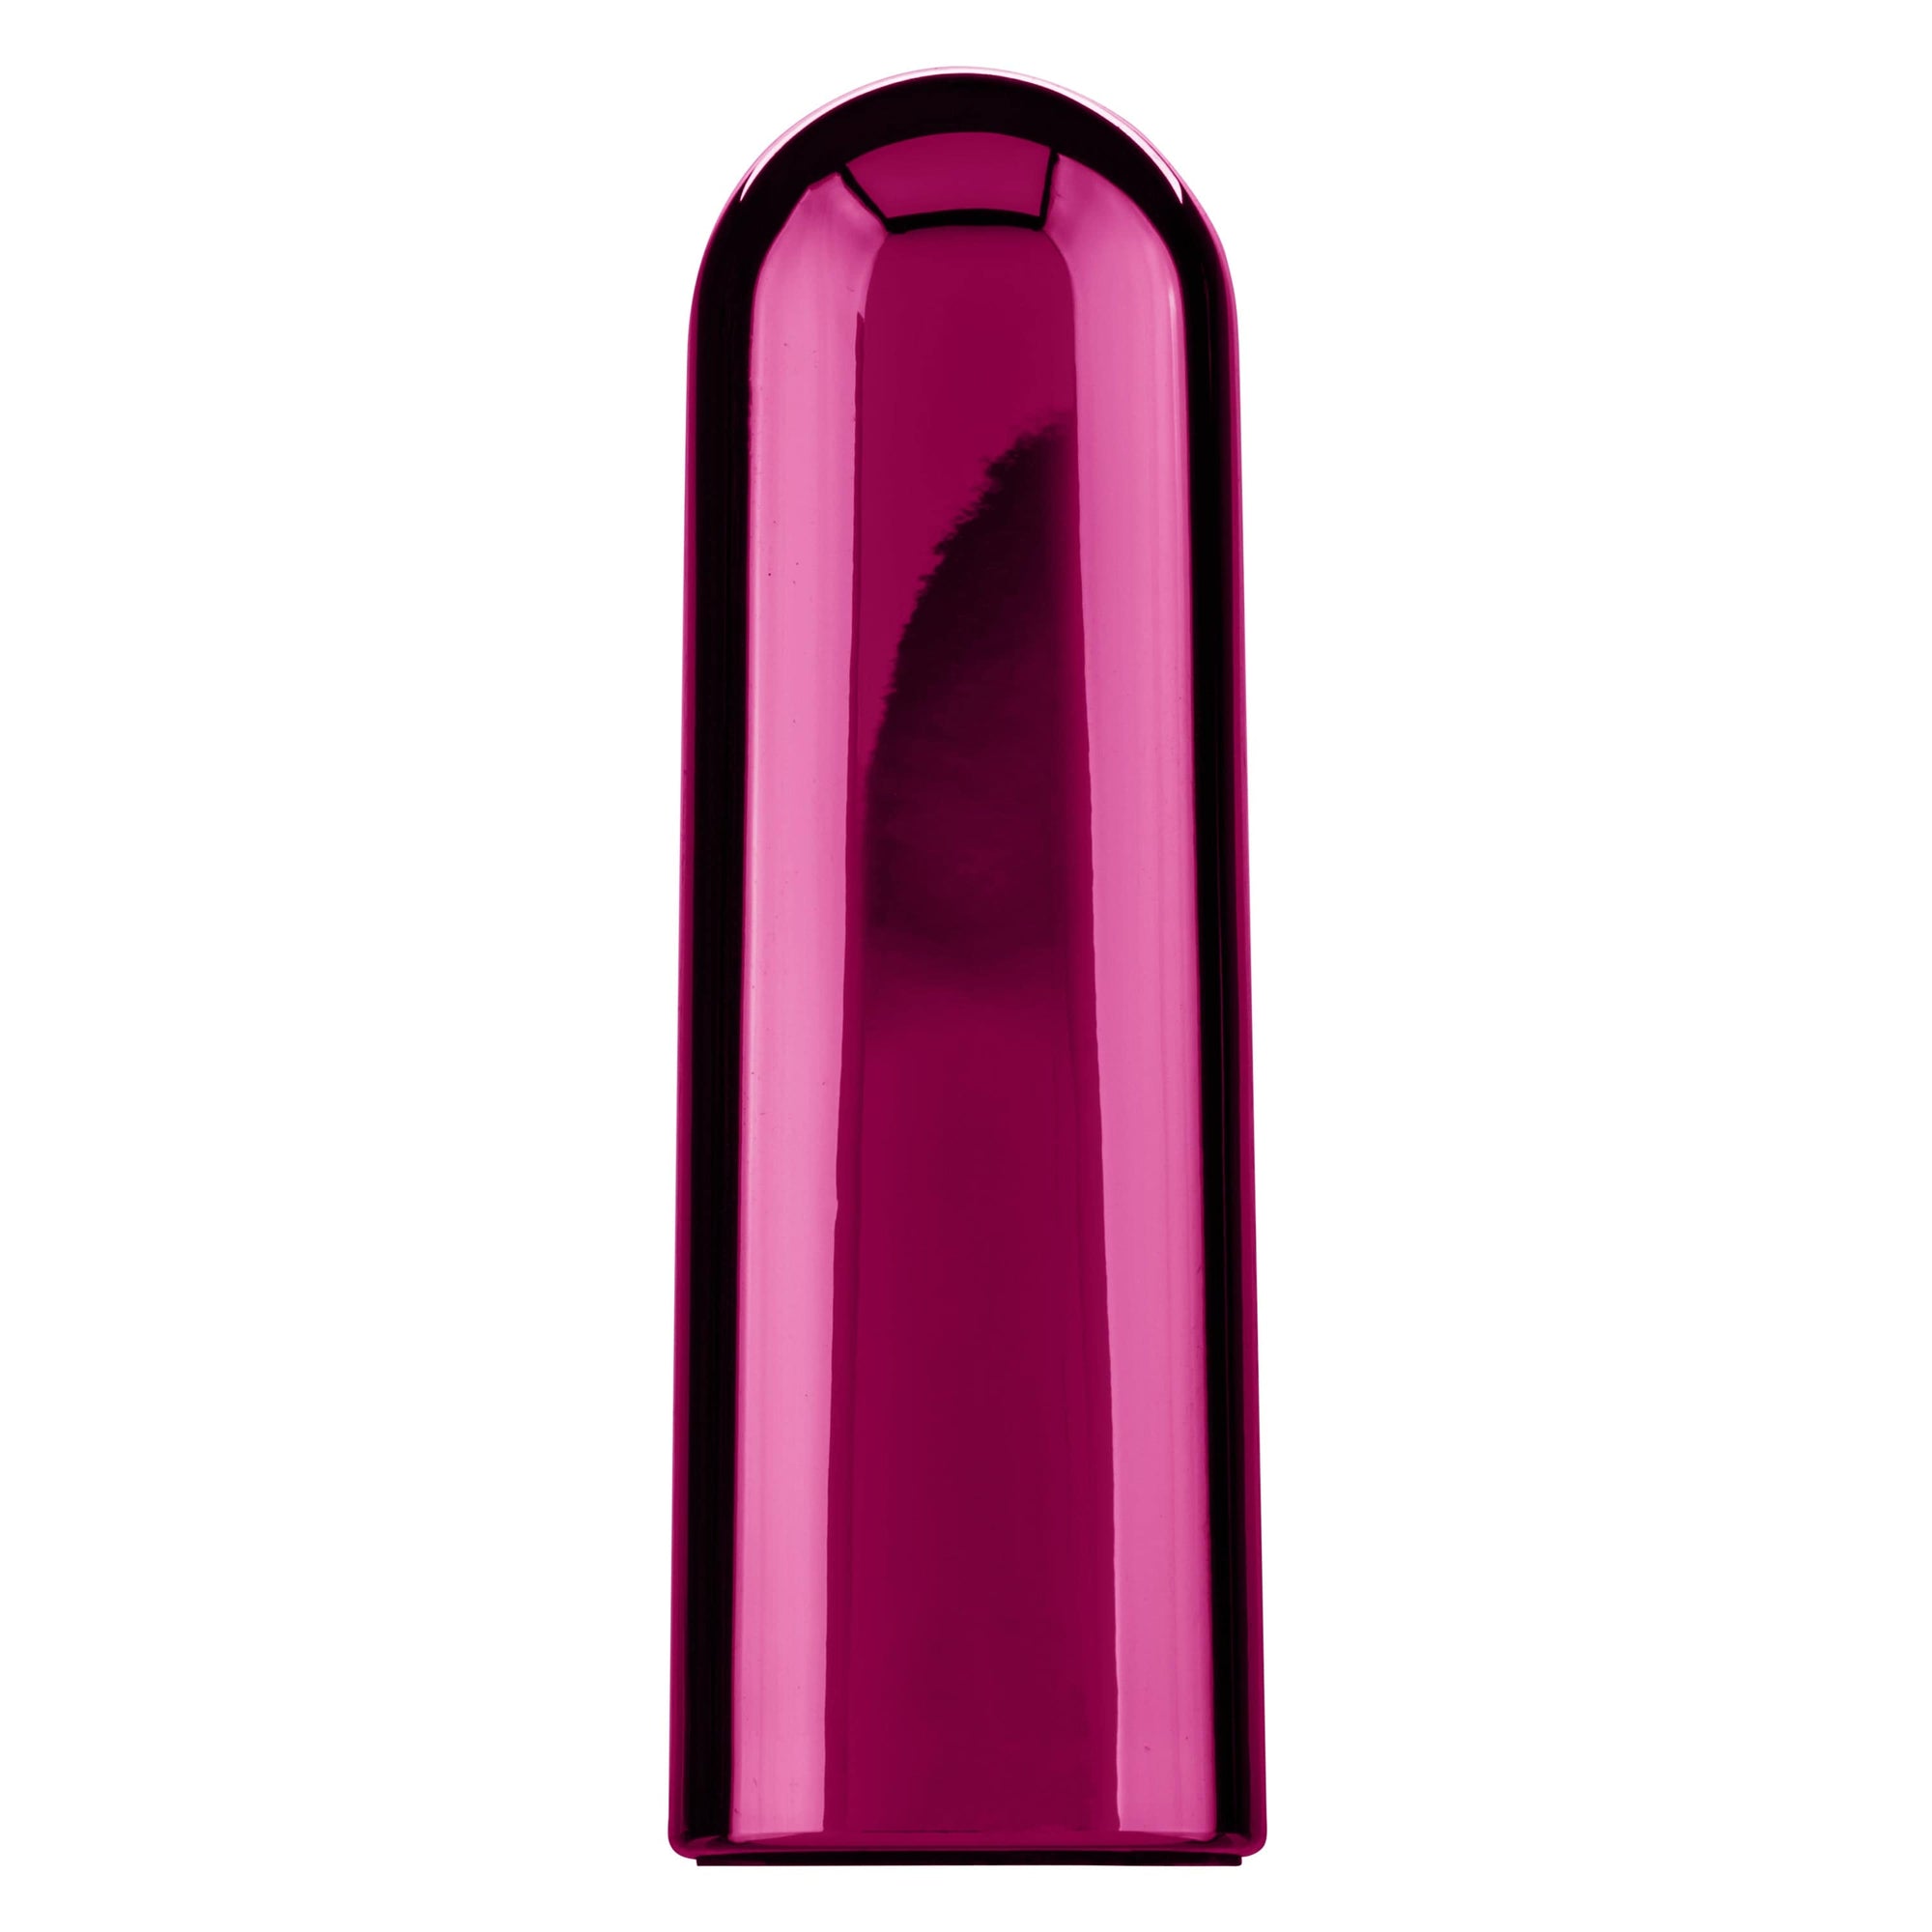 California Exotics - Fierce Power Glam Bullet Vibrator (Pink) -  Bullet (Vibration) Rechargeable  Durio.sg